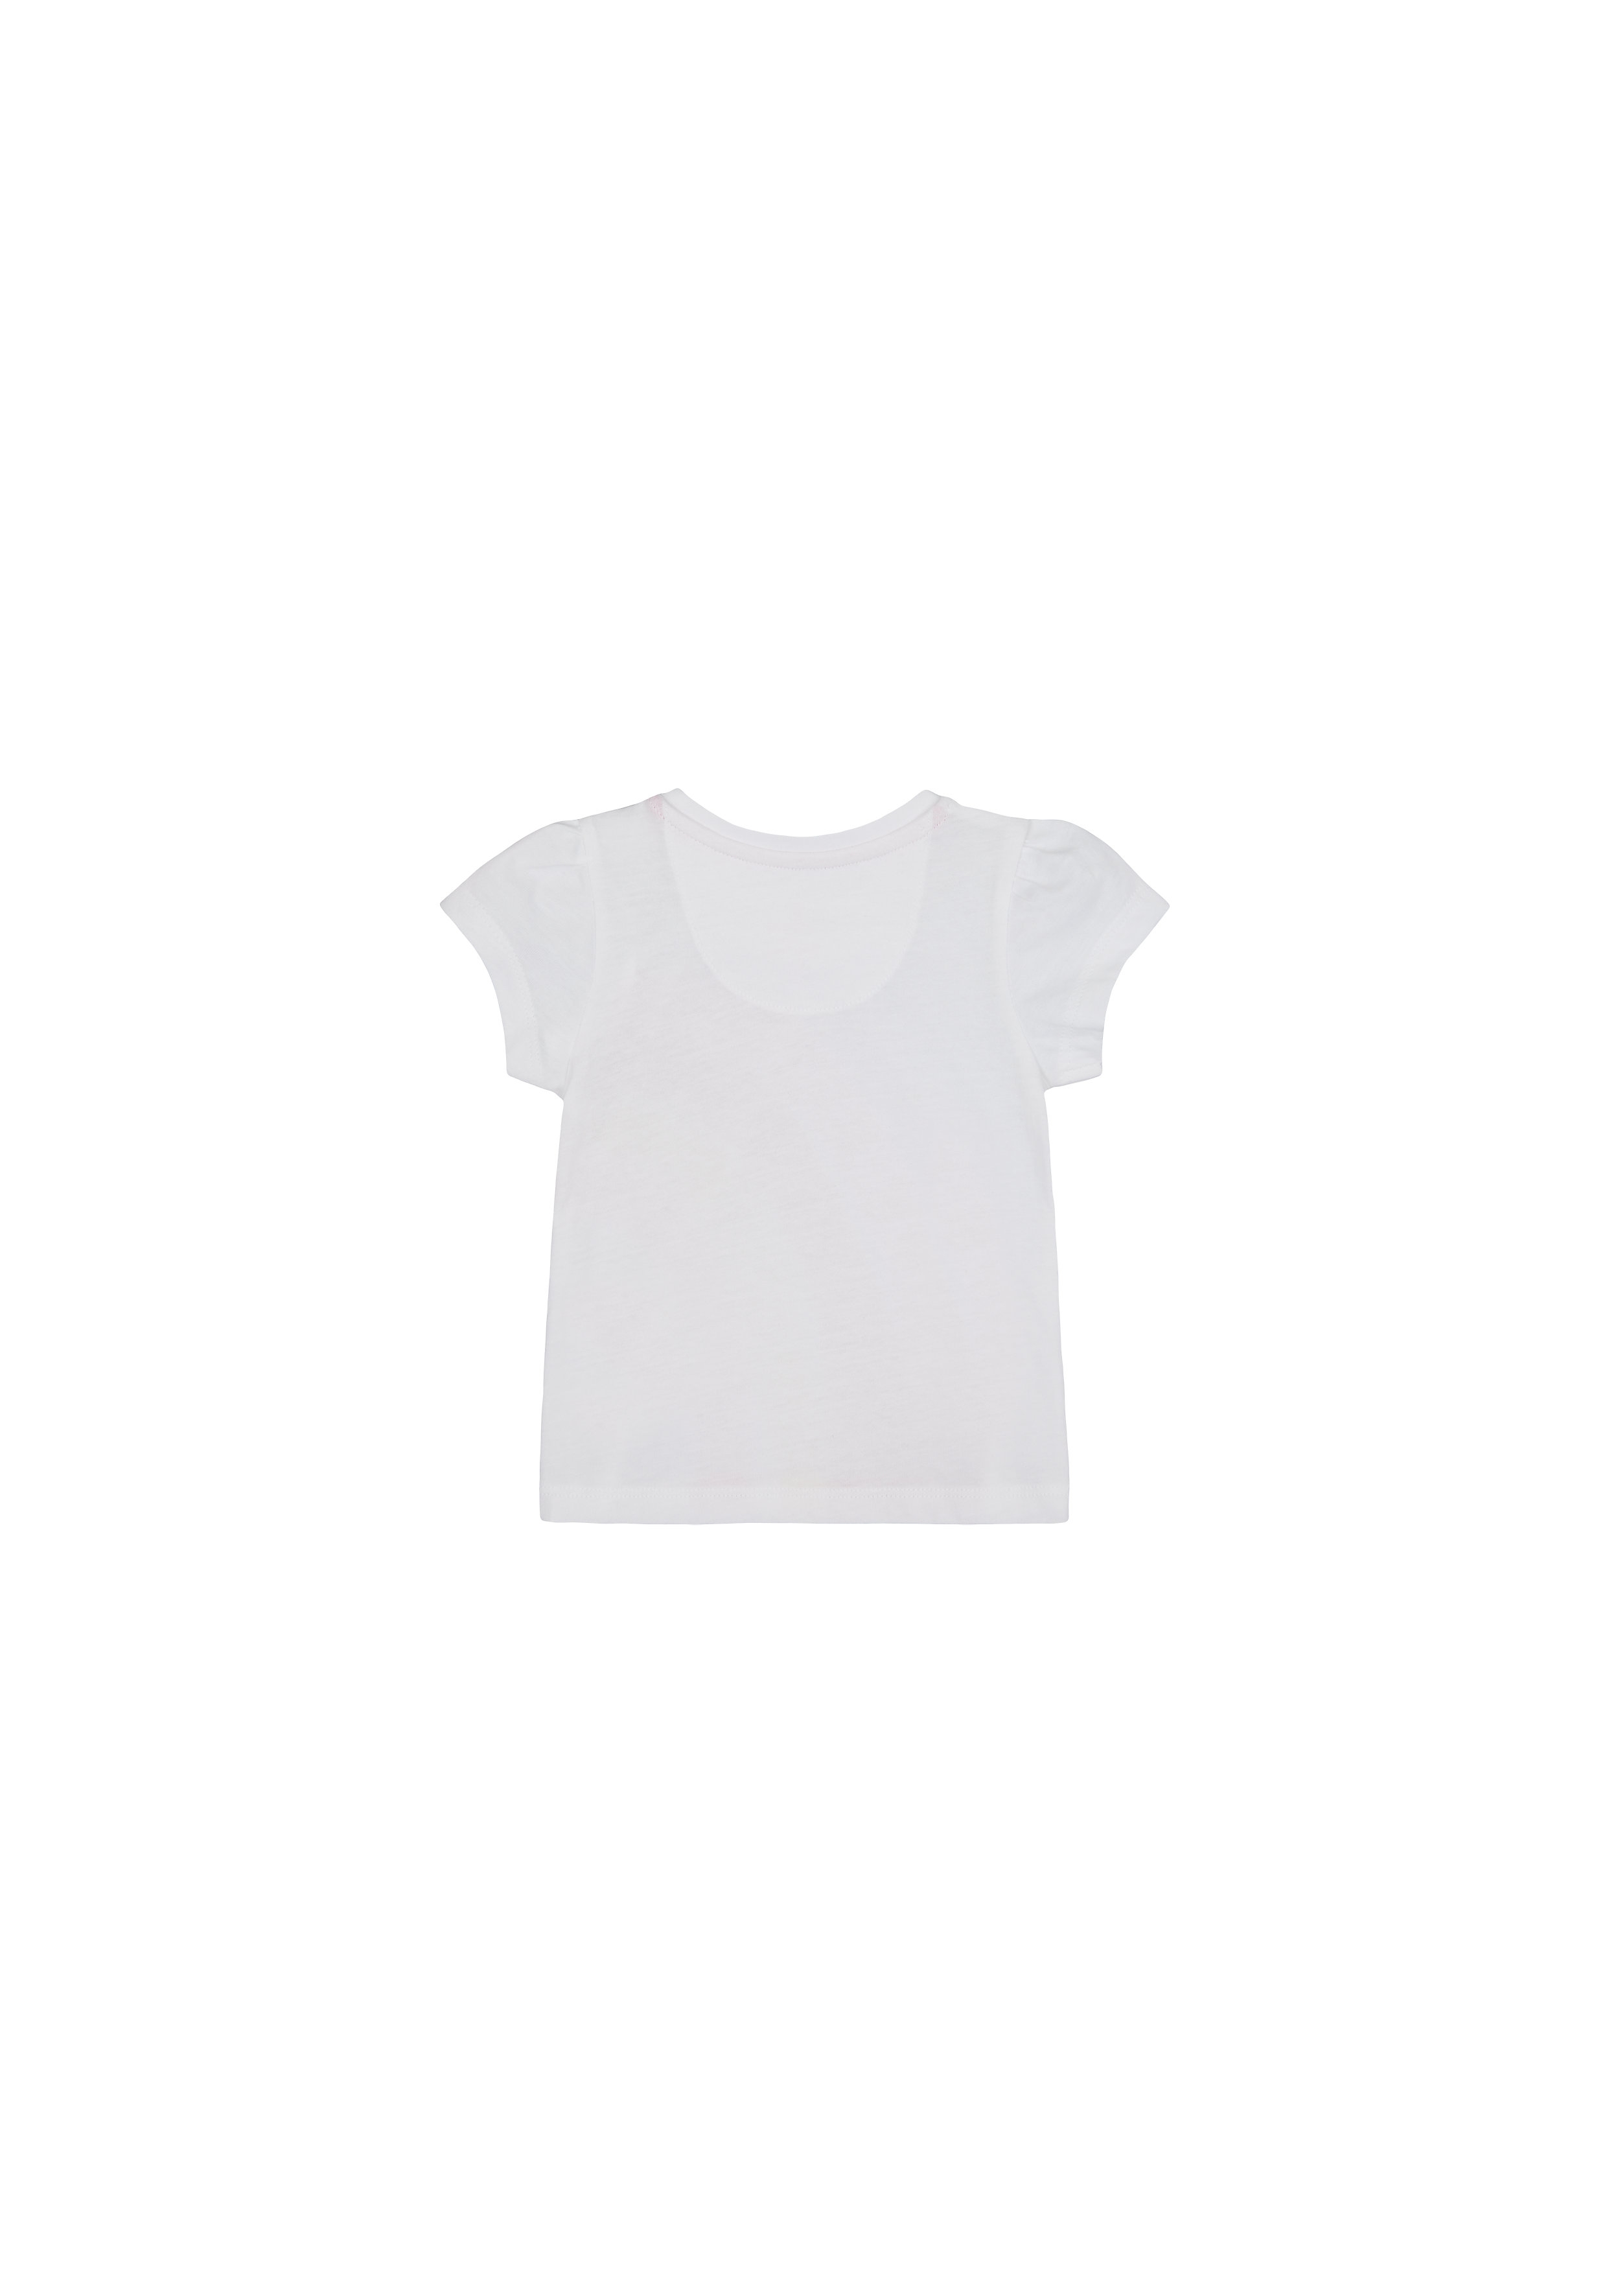 Mothercare | Girls Half Sleeves T-Shirt Rainbow Print - White 1